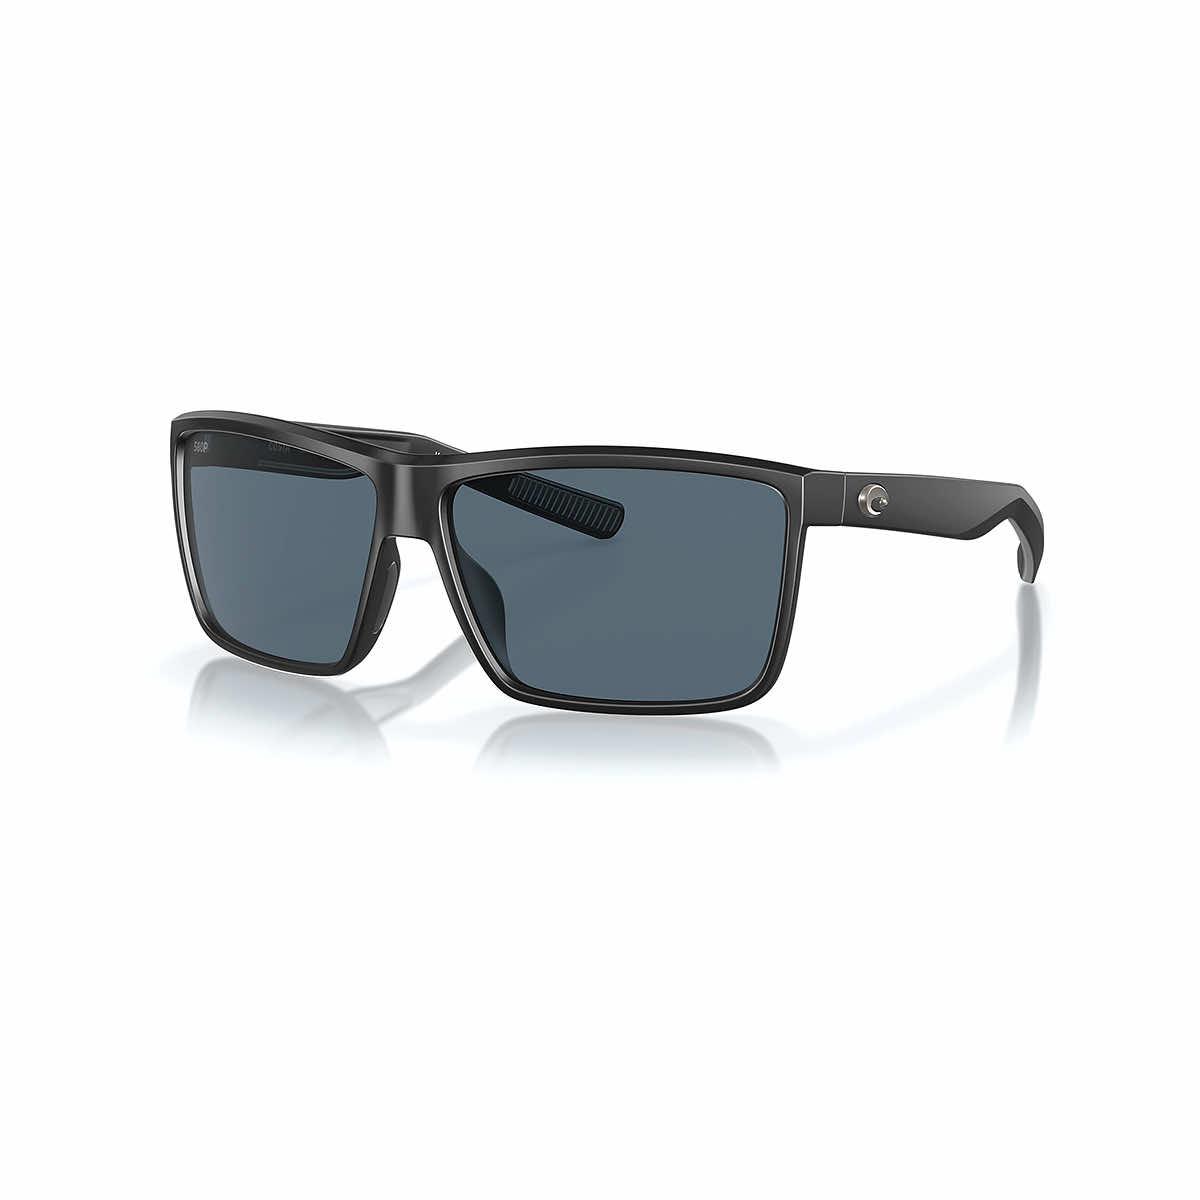  Rinconcito 580p Sunglasses - Polarized Plastic